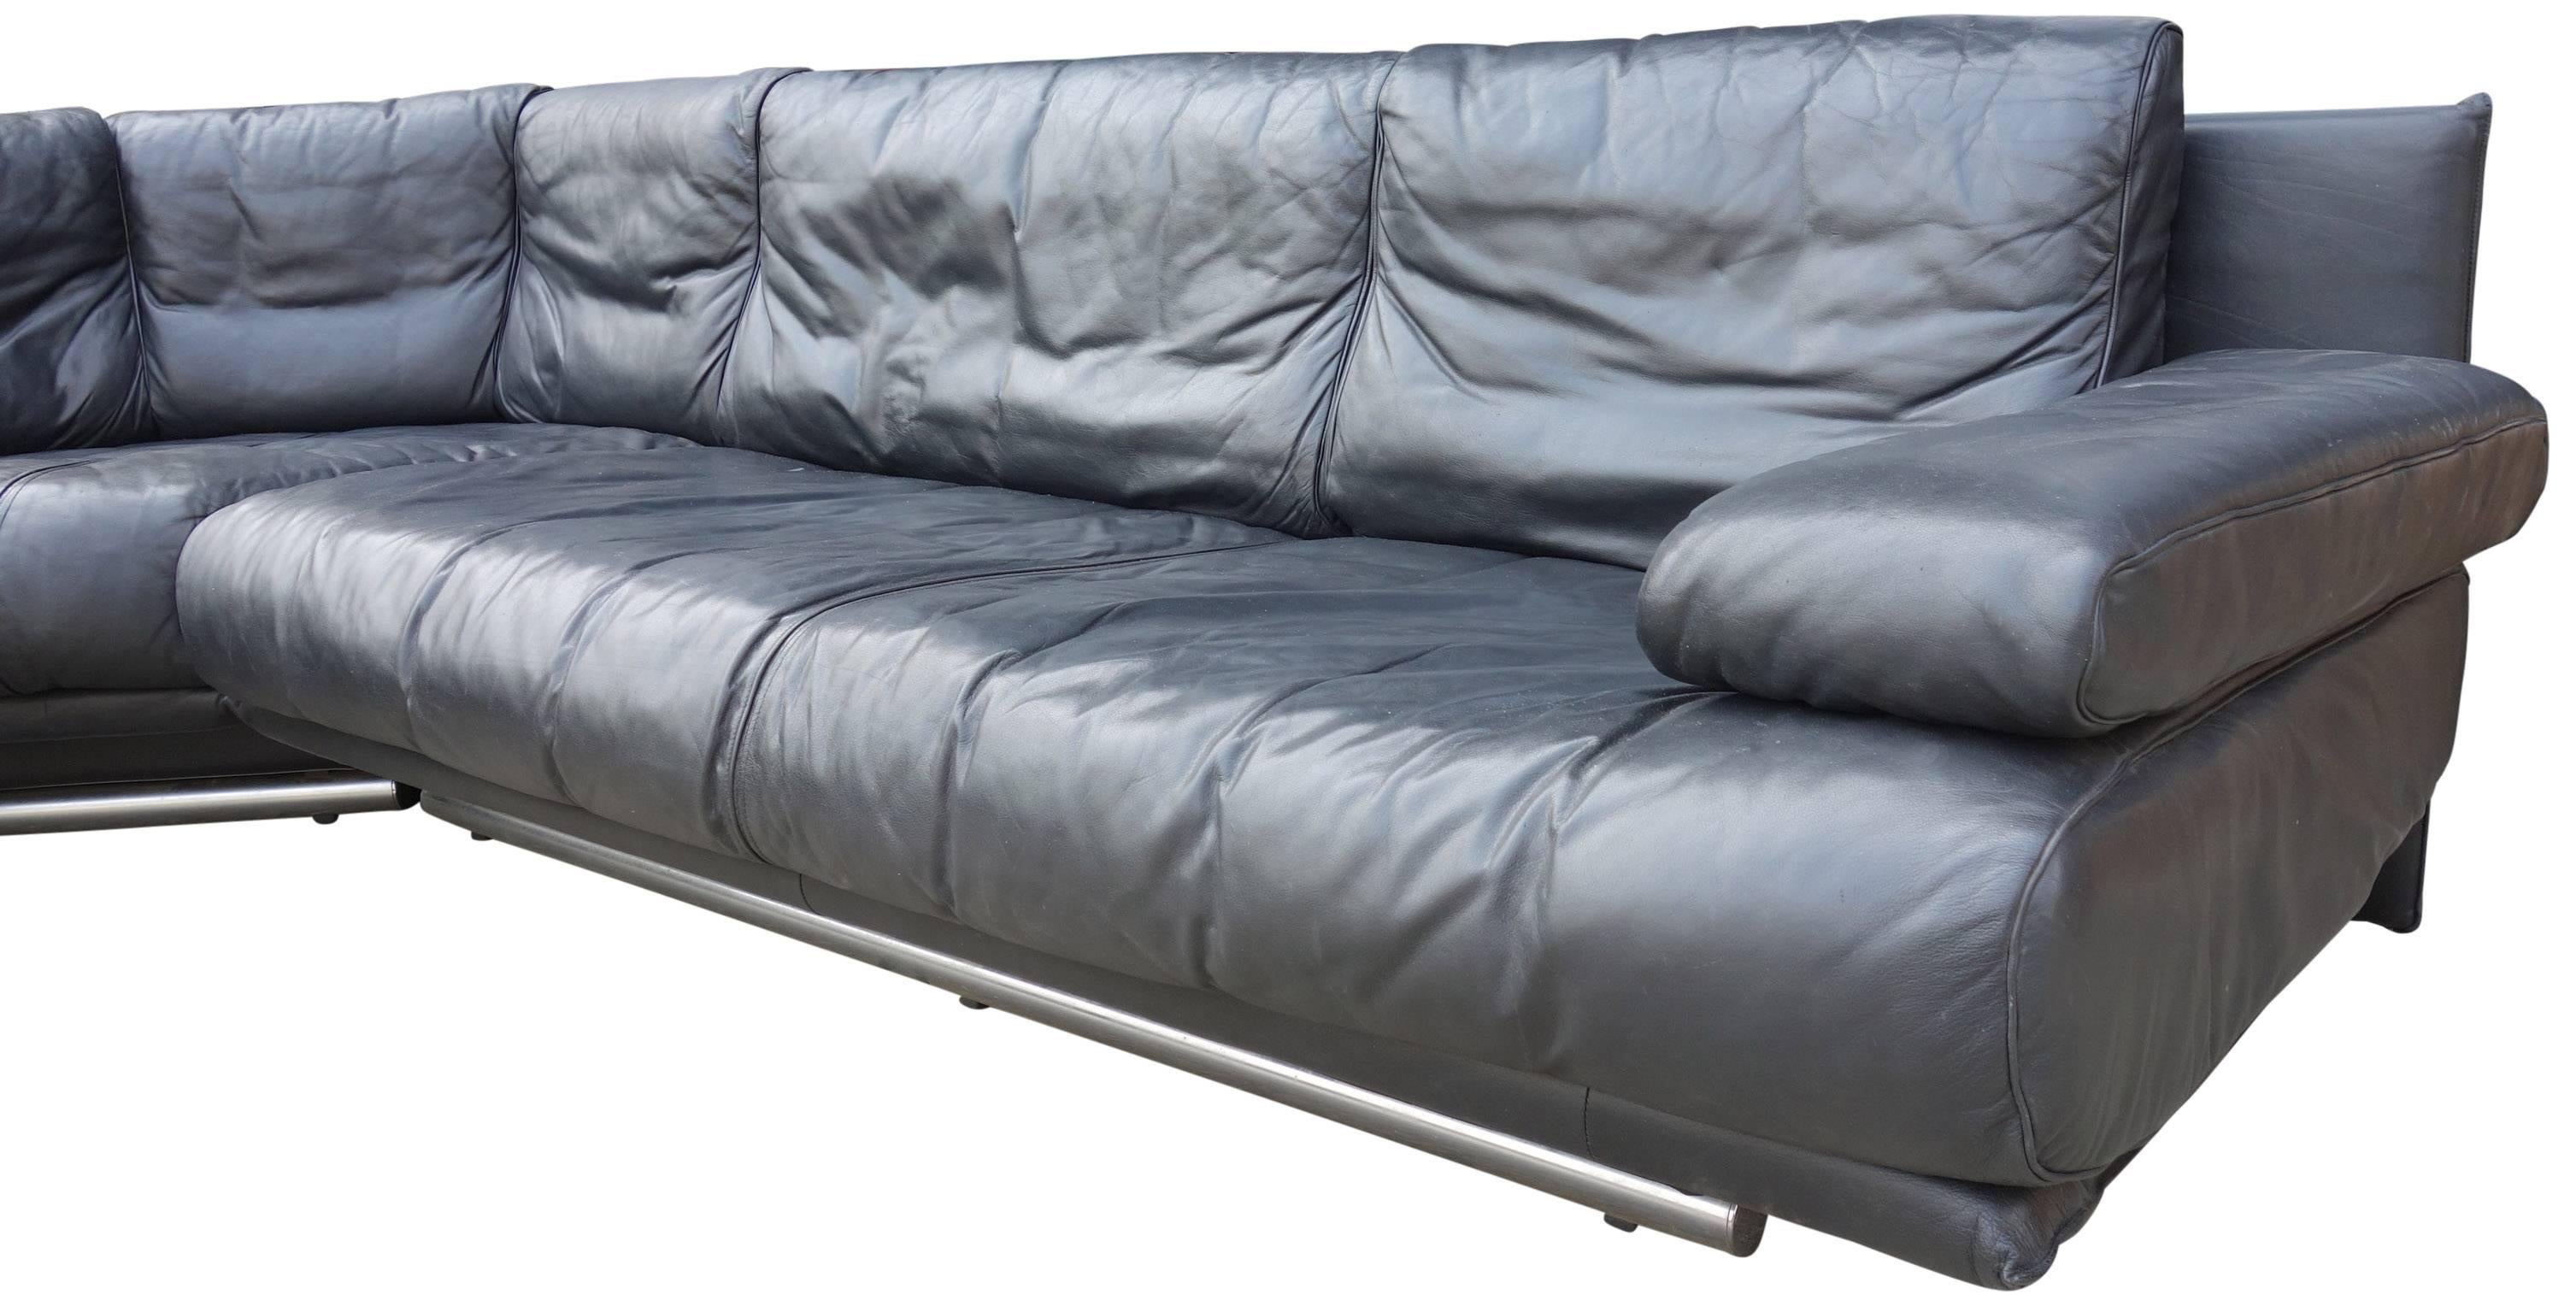 Mid-Century Modern Midcentury Leather Sectional Sofa